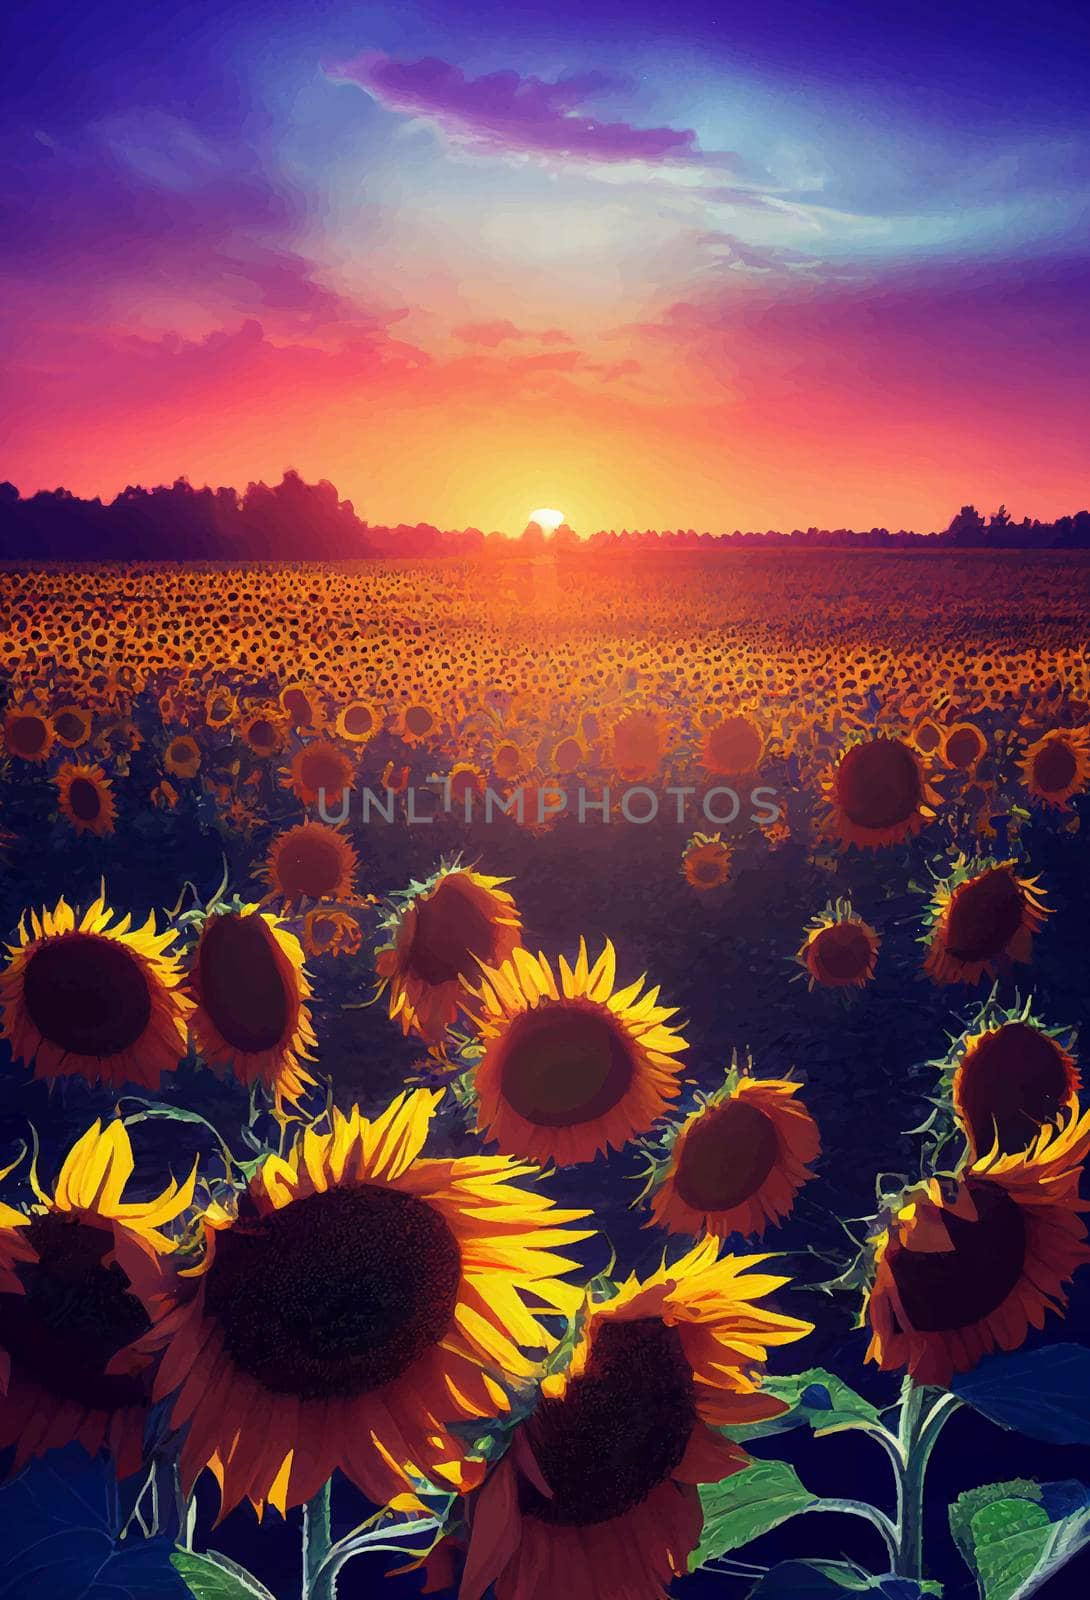 sunflowers under the colorful sky. Beautiful sunflower field. by JpRamos